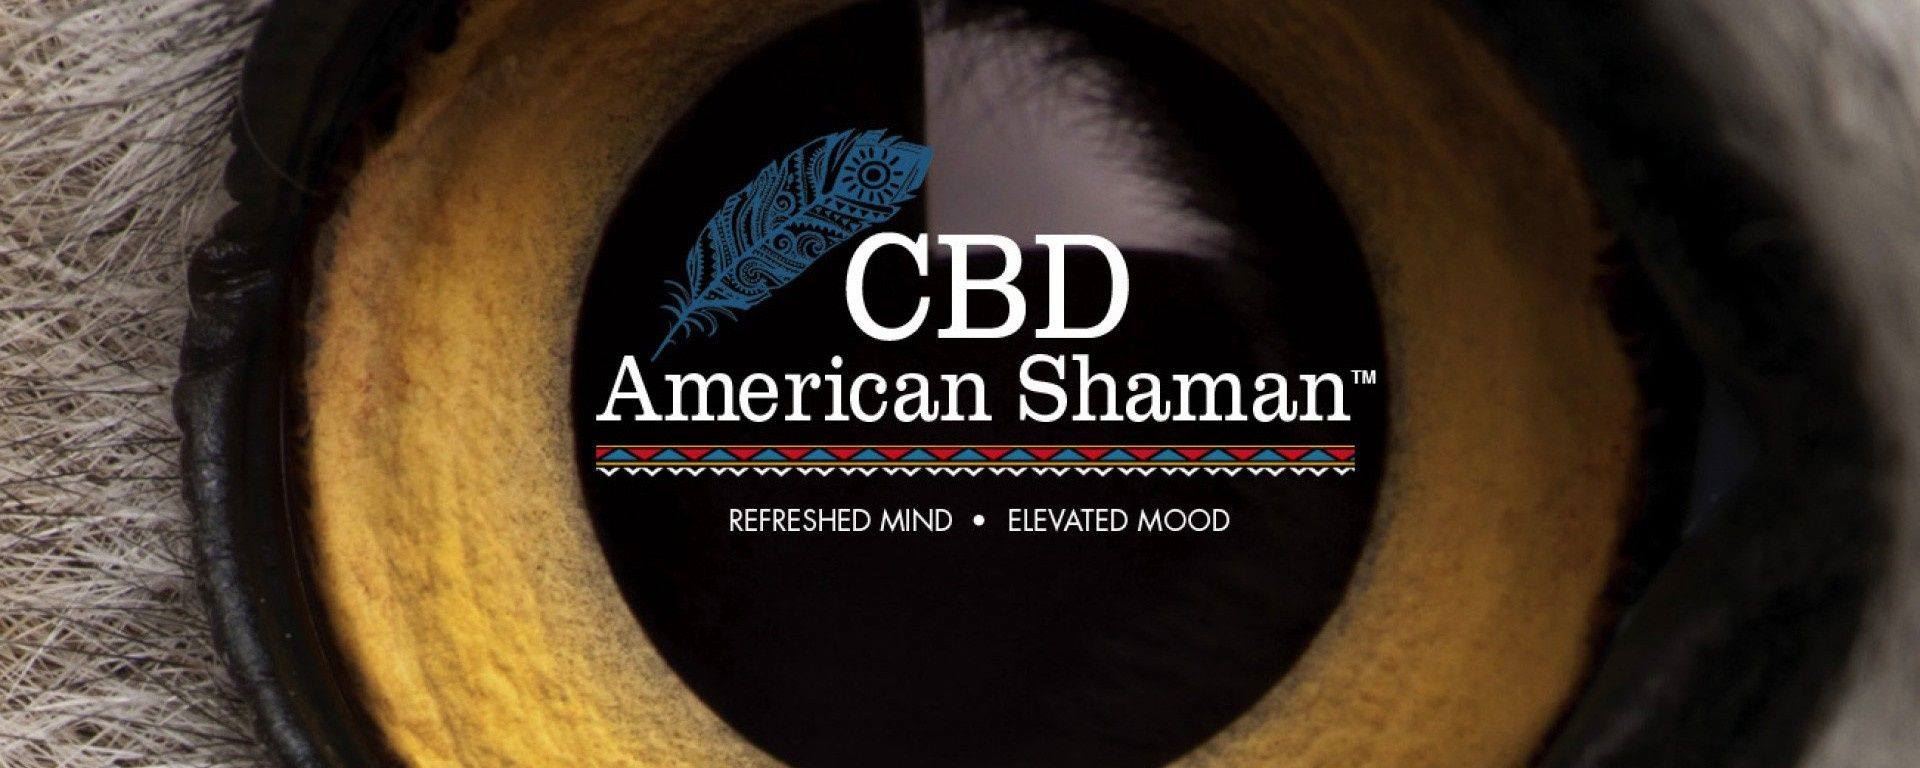 CBD Store Carmel, IN | CBD Store Near Me | CBD American Shaman Indy